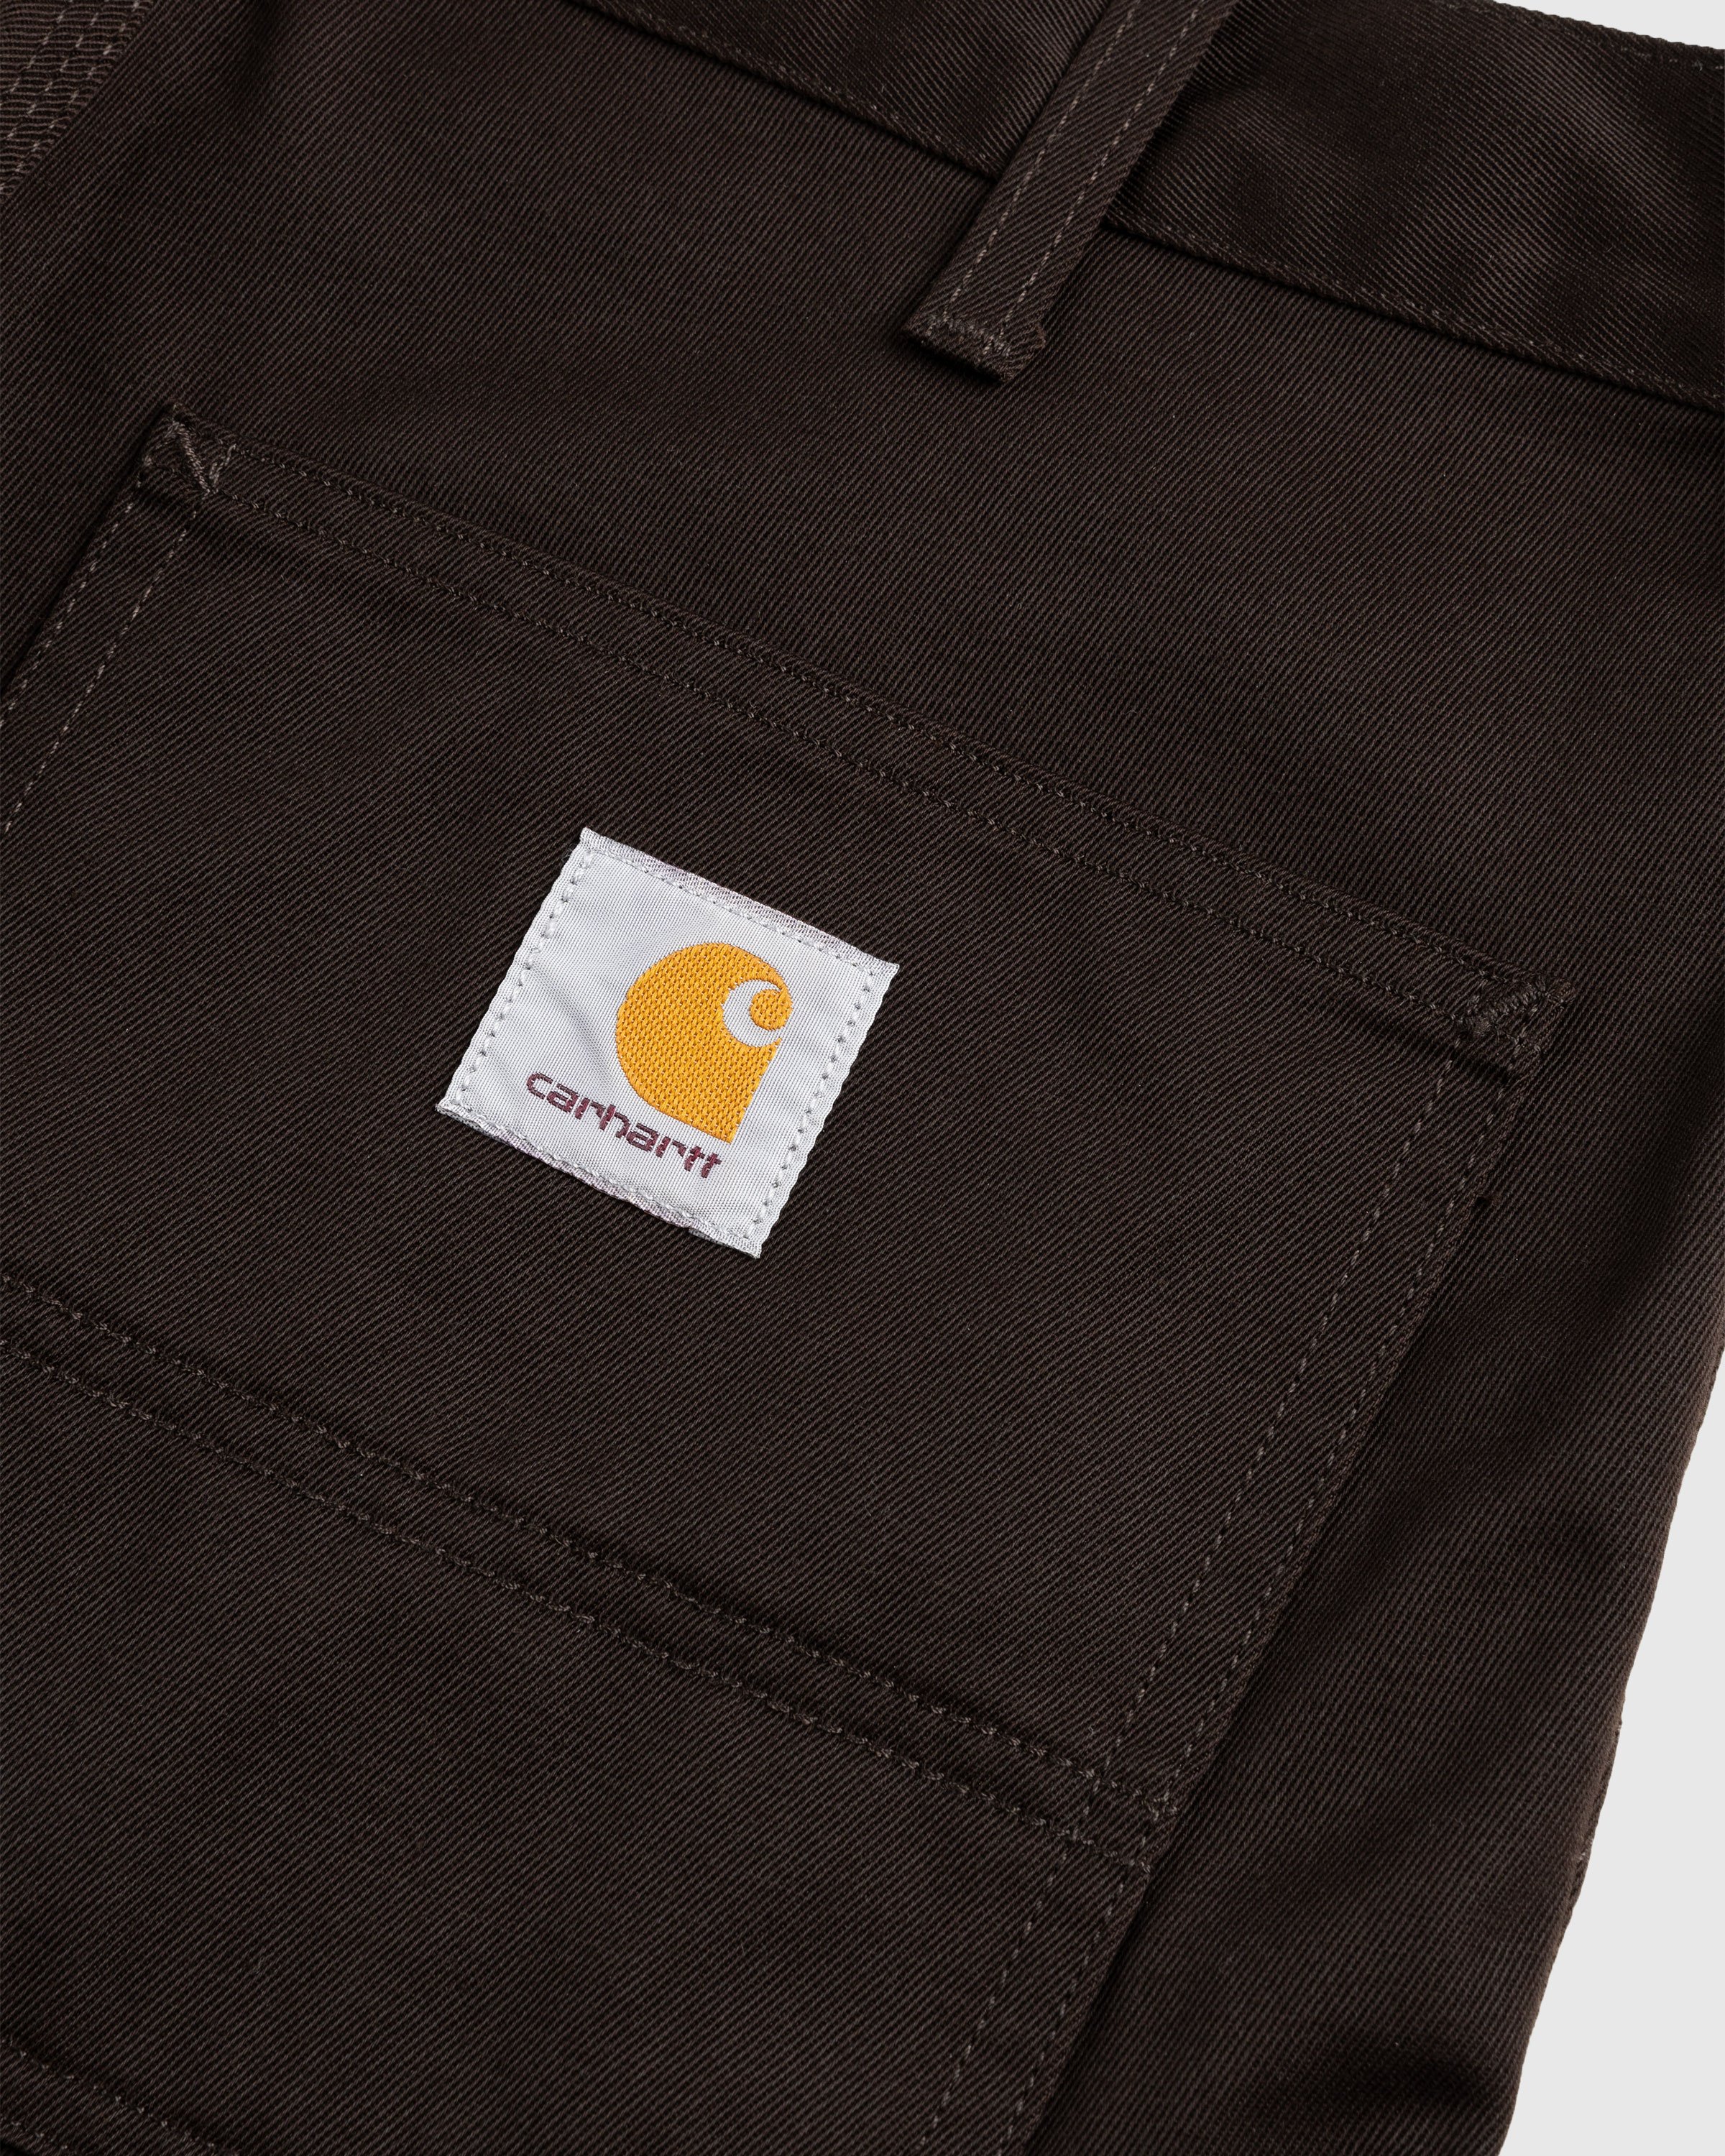 Carhartt WIP - Double Knee Pant Tobacco/Rinsed - Clothing - Brown - Image 7